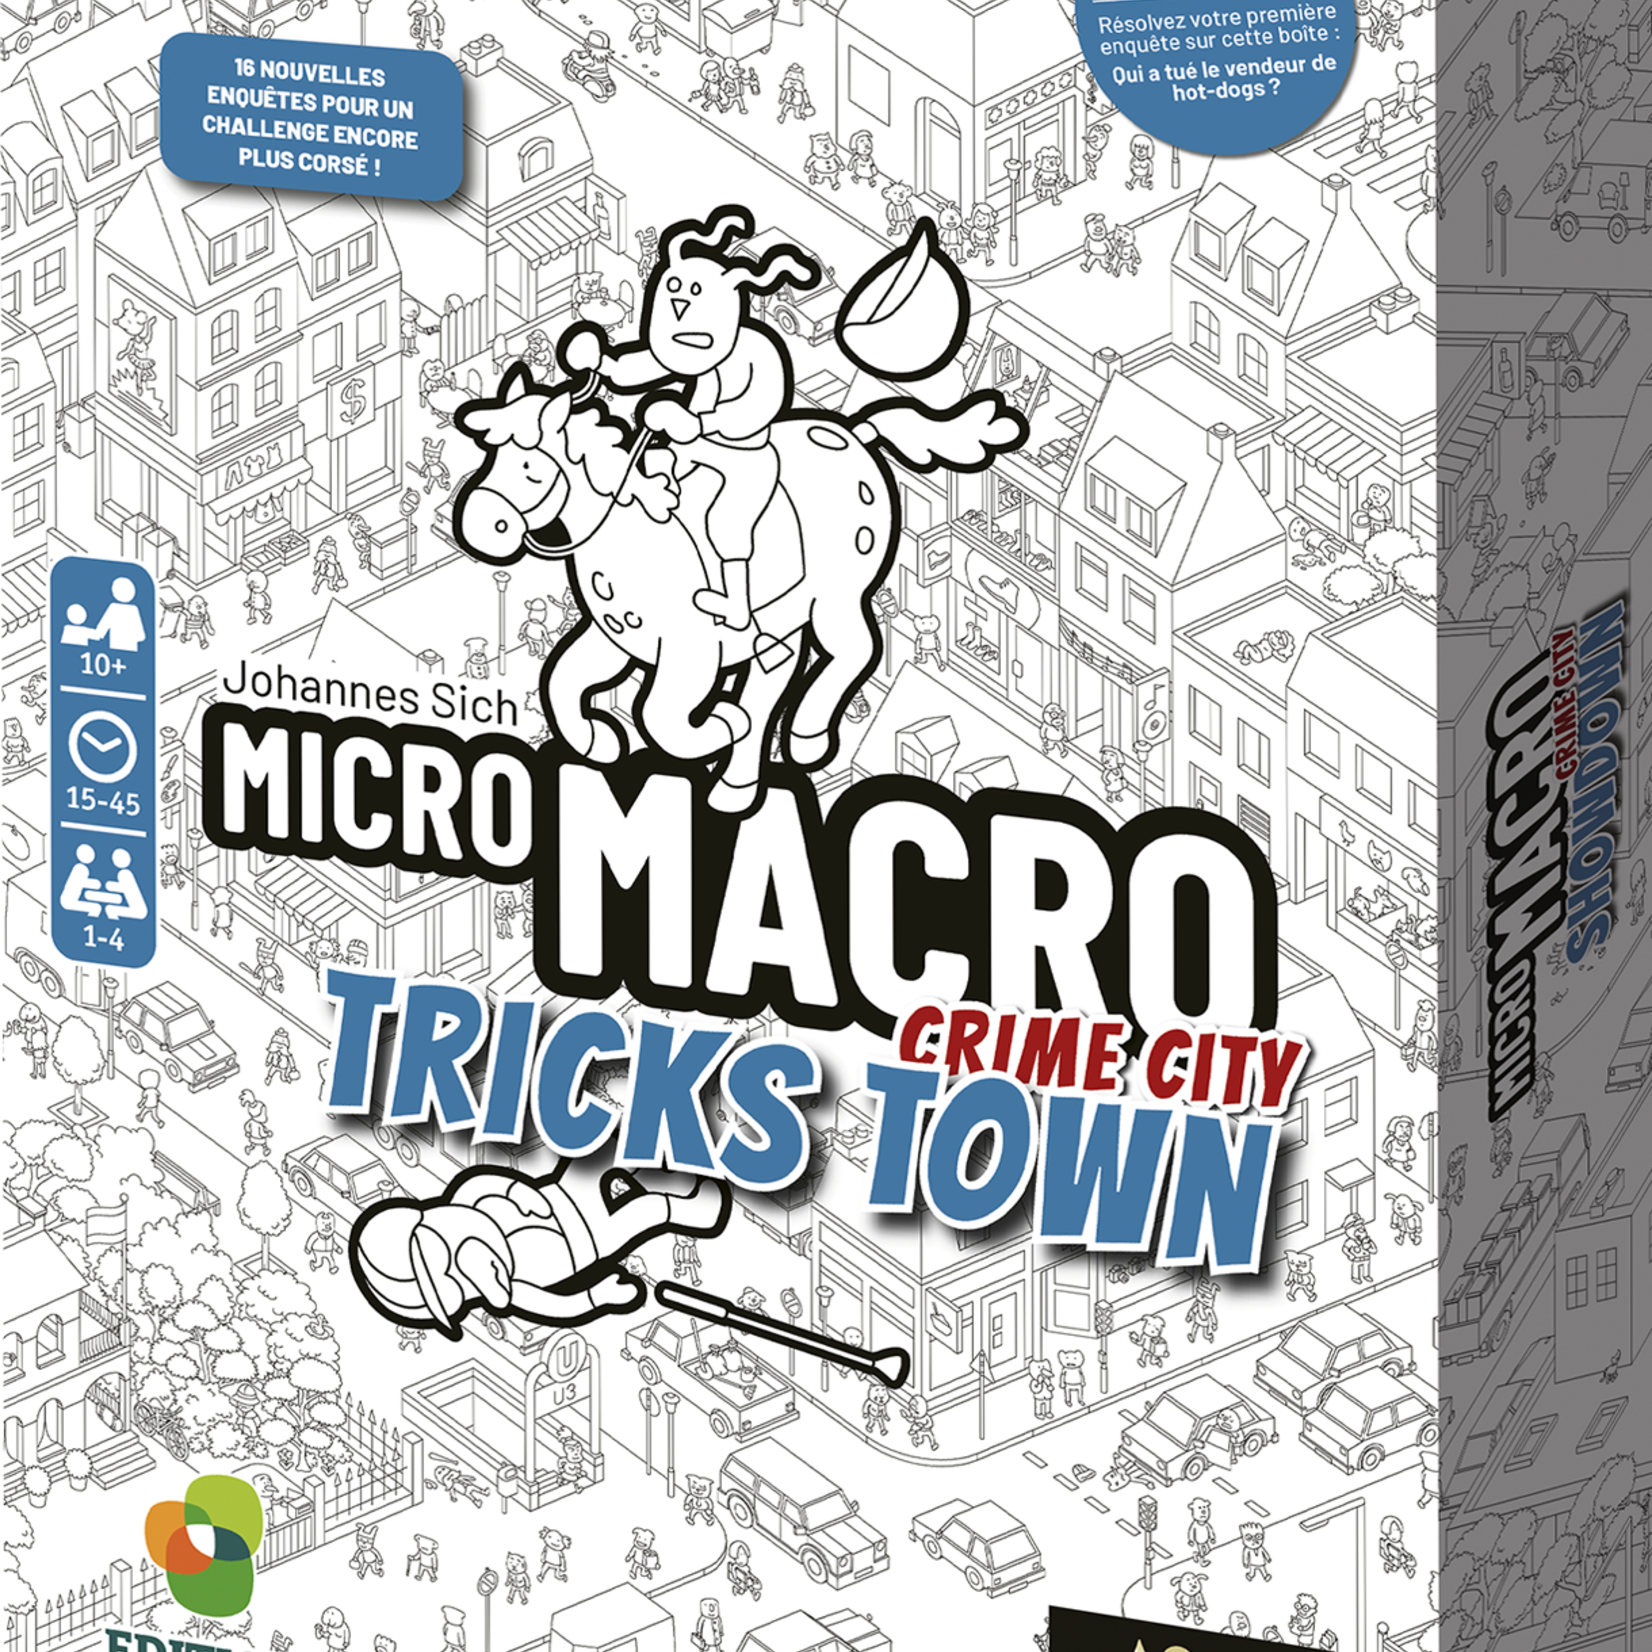 Blackrock Games Micro Macro Crime City - Tricks Town